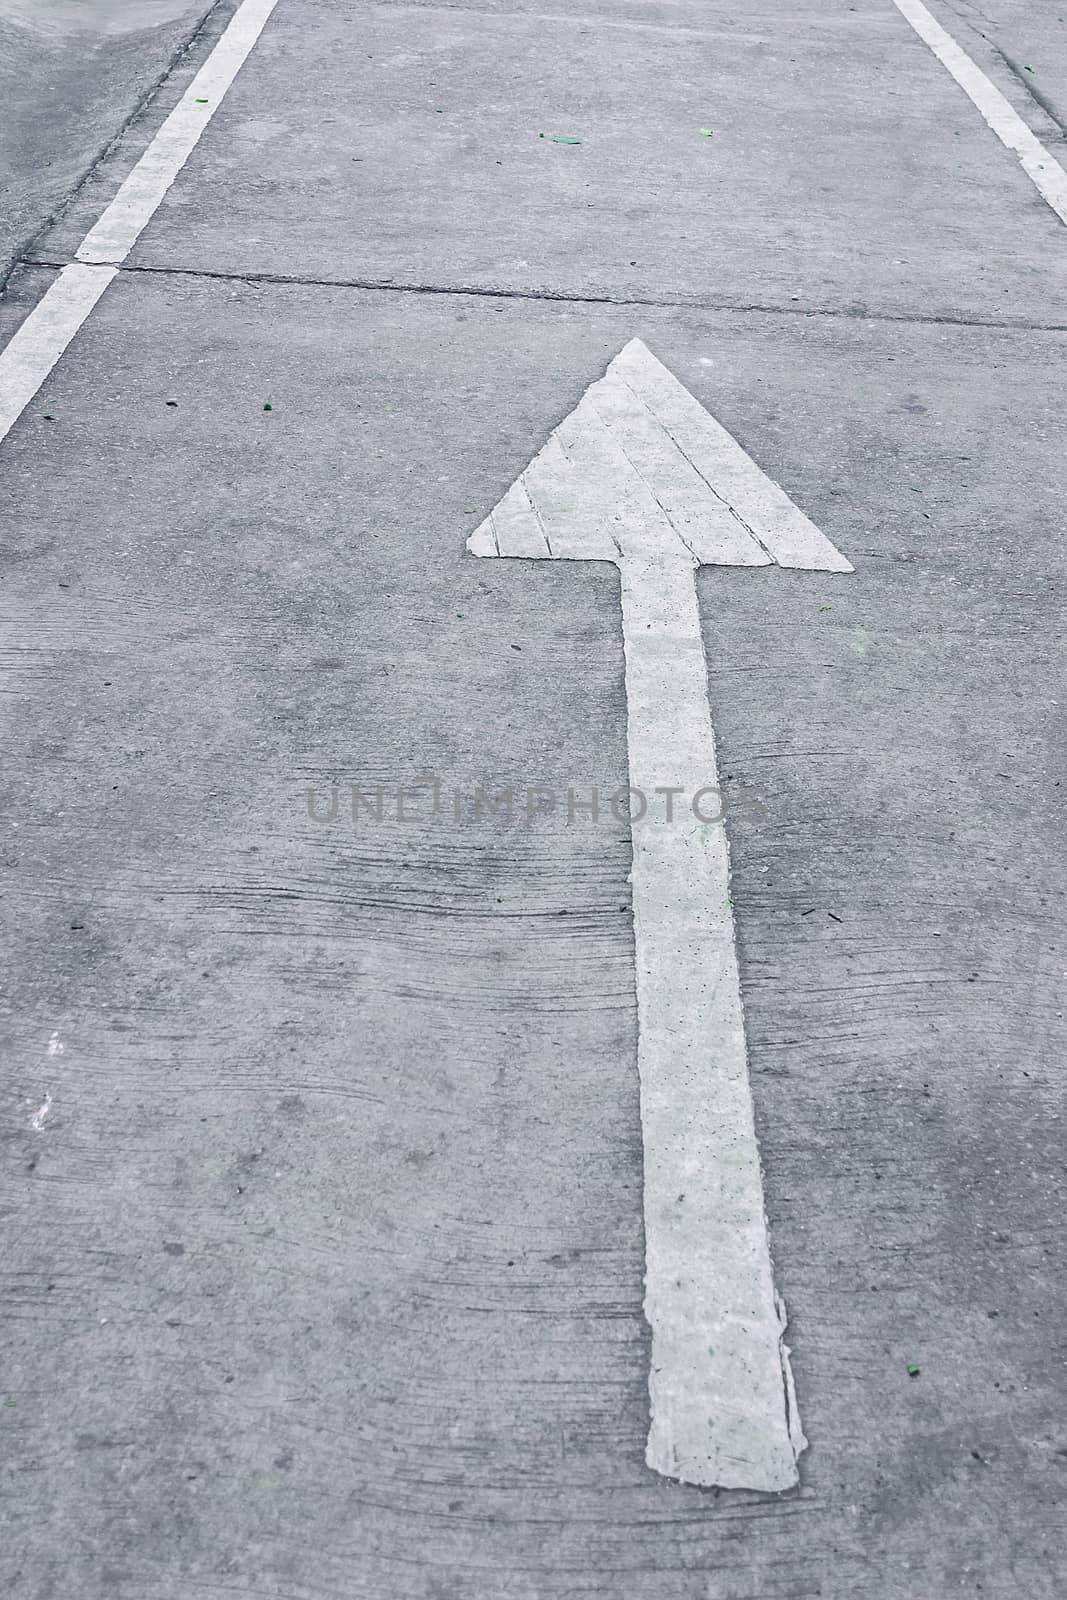 white arrow on road, direction straight. by rakoptonLPN